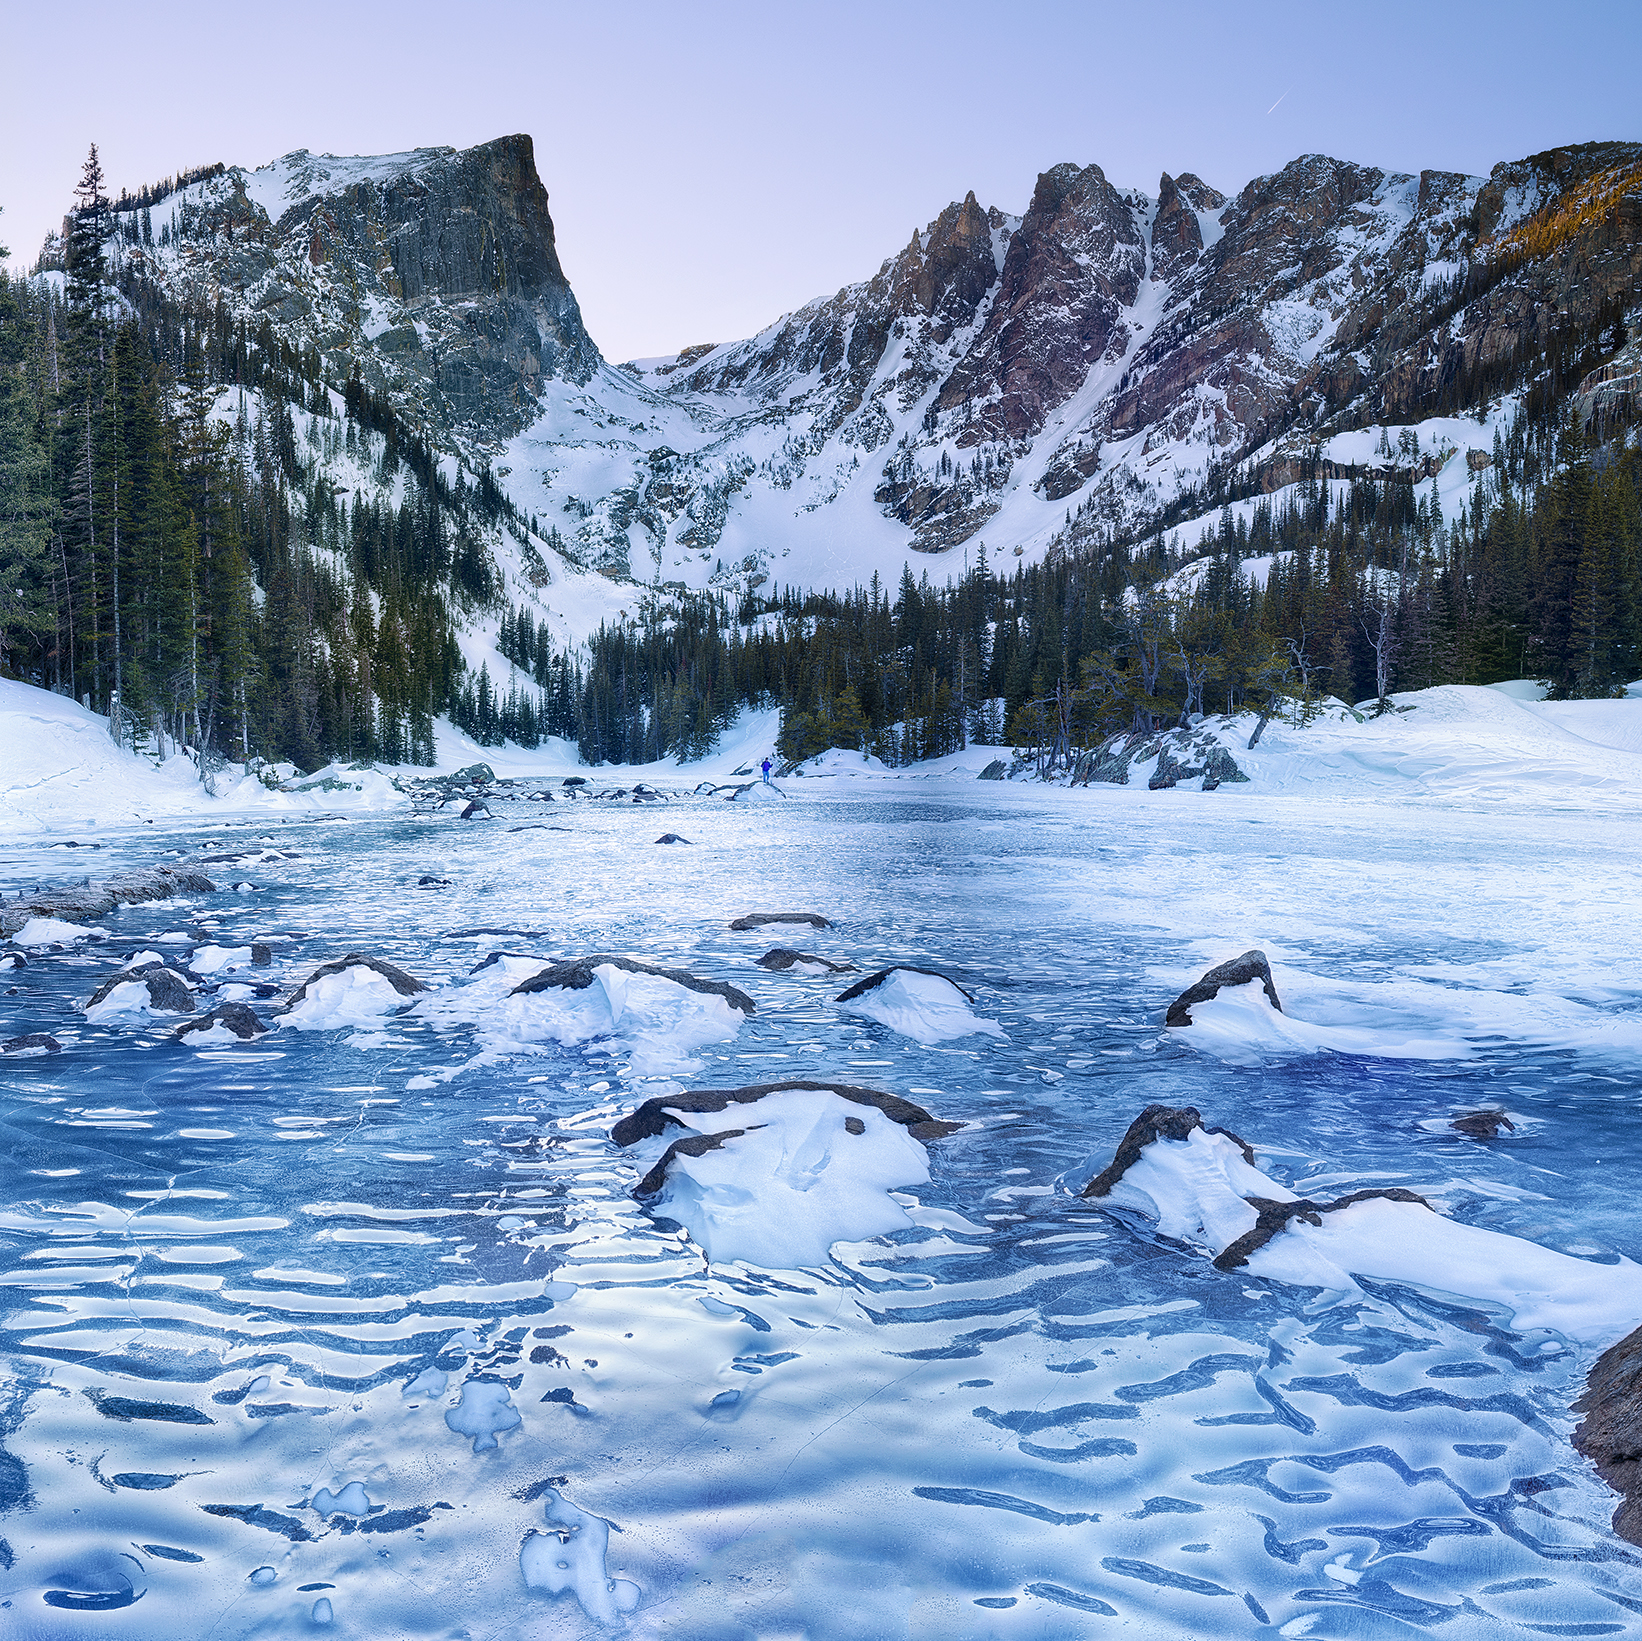 "Frozen Dream lake"